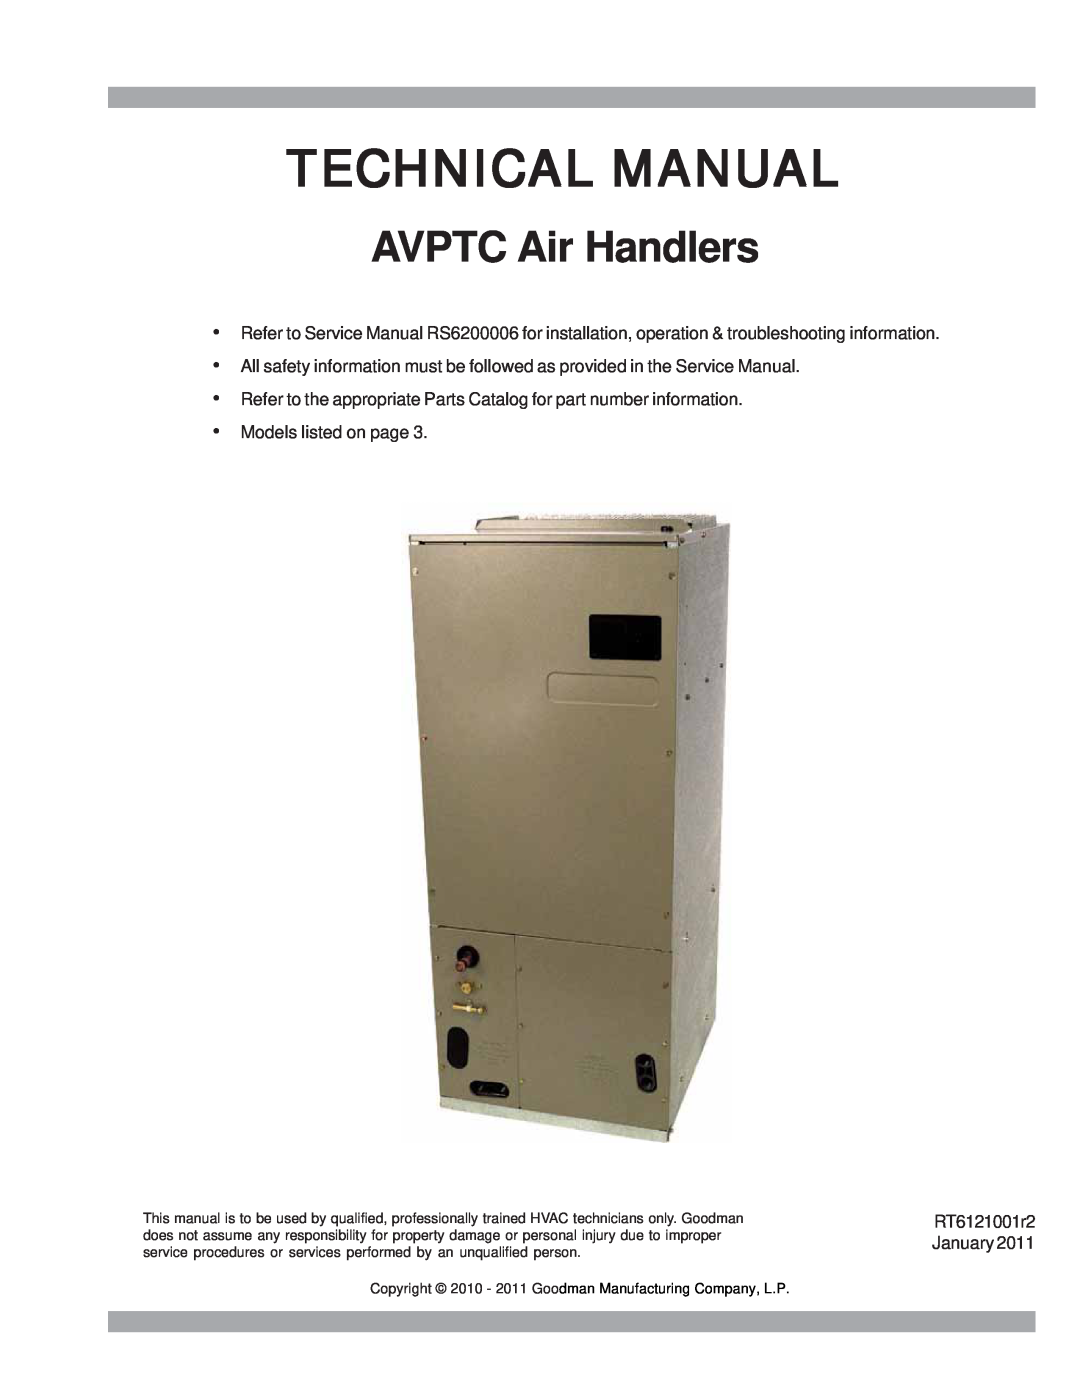 Goodman Mfg AVPTC313714, AVPTC183014 service manual Technical Manual, AVPTC Air Handlers 